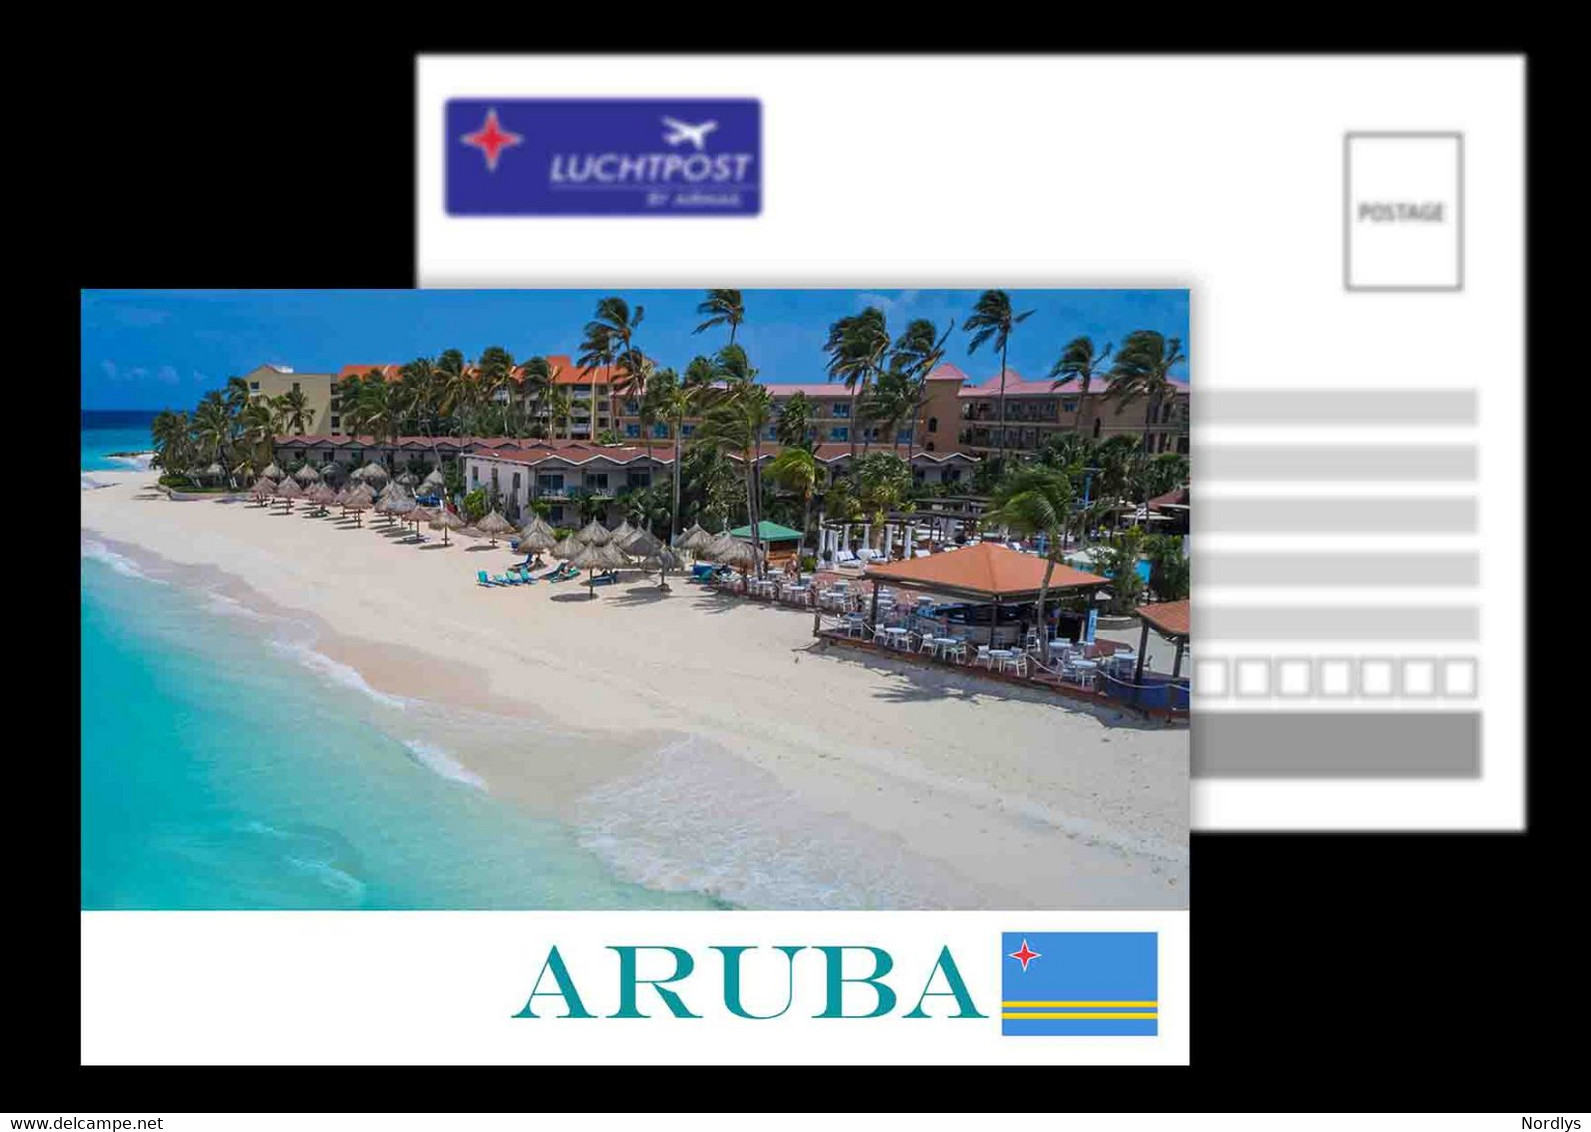 Aruba / Oranjested / Postcard /View Card - Aruba